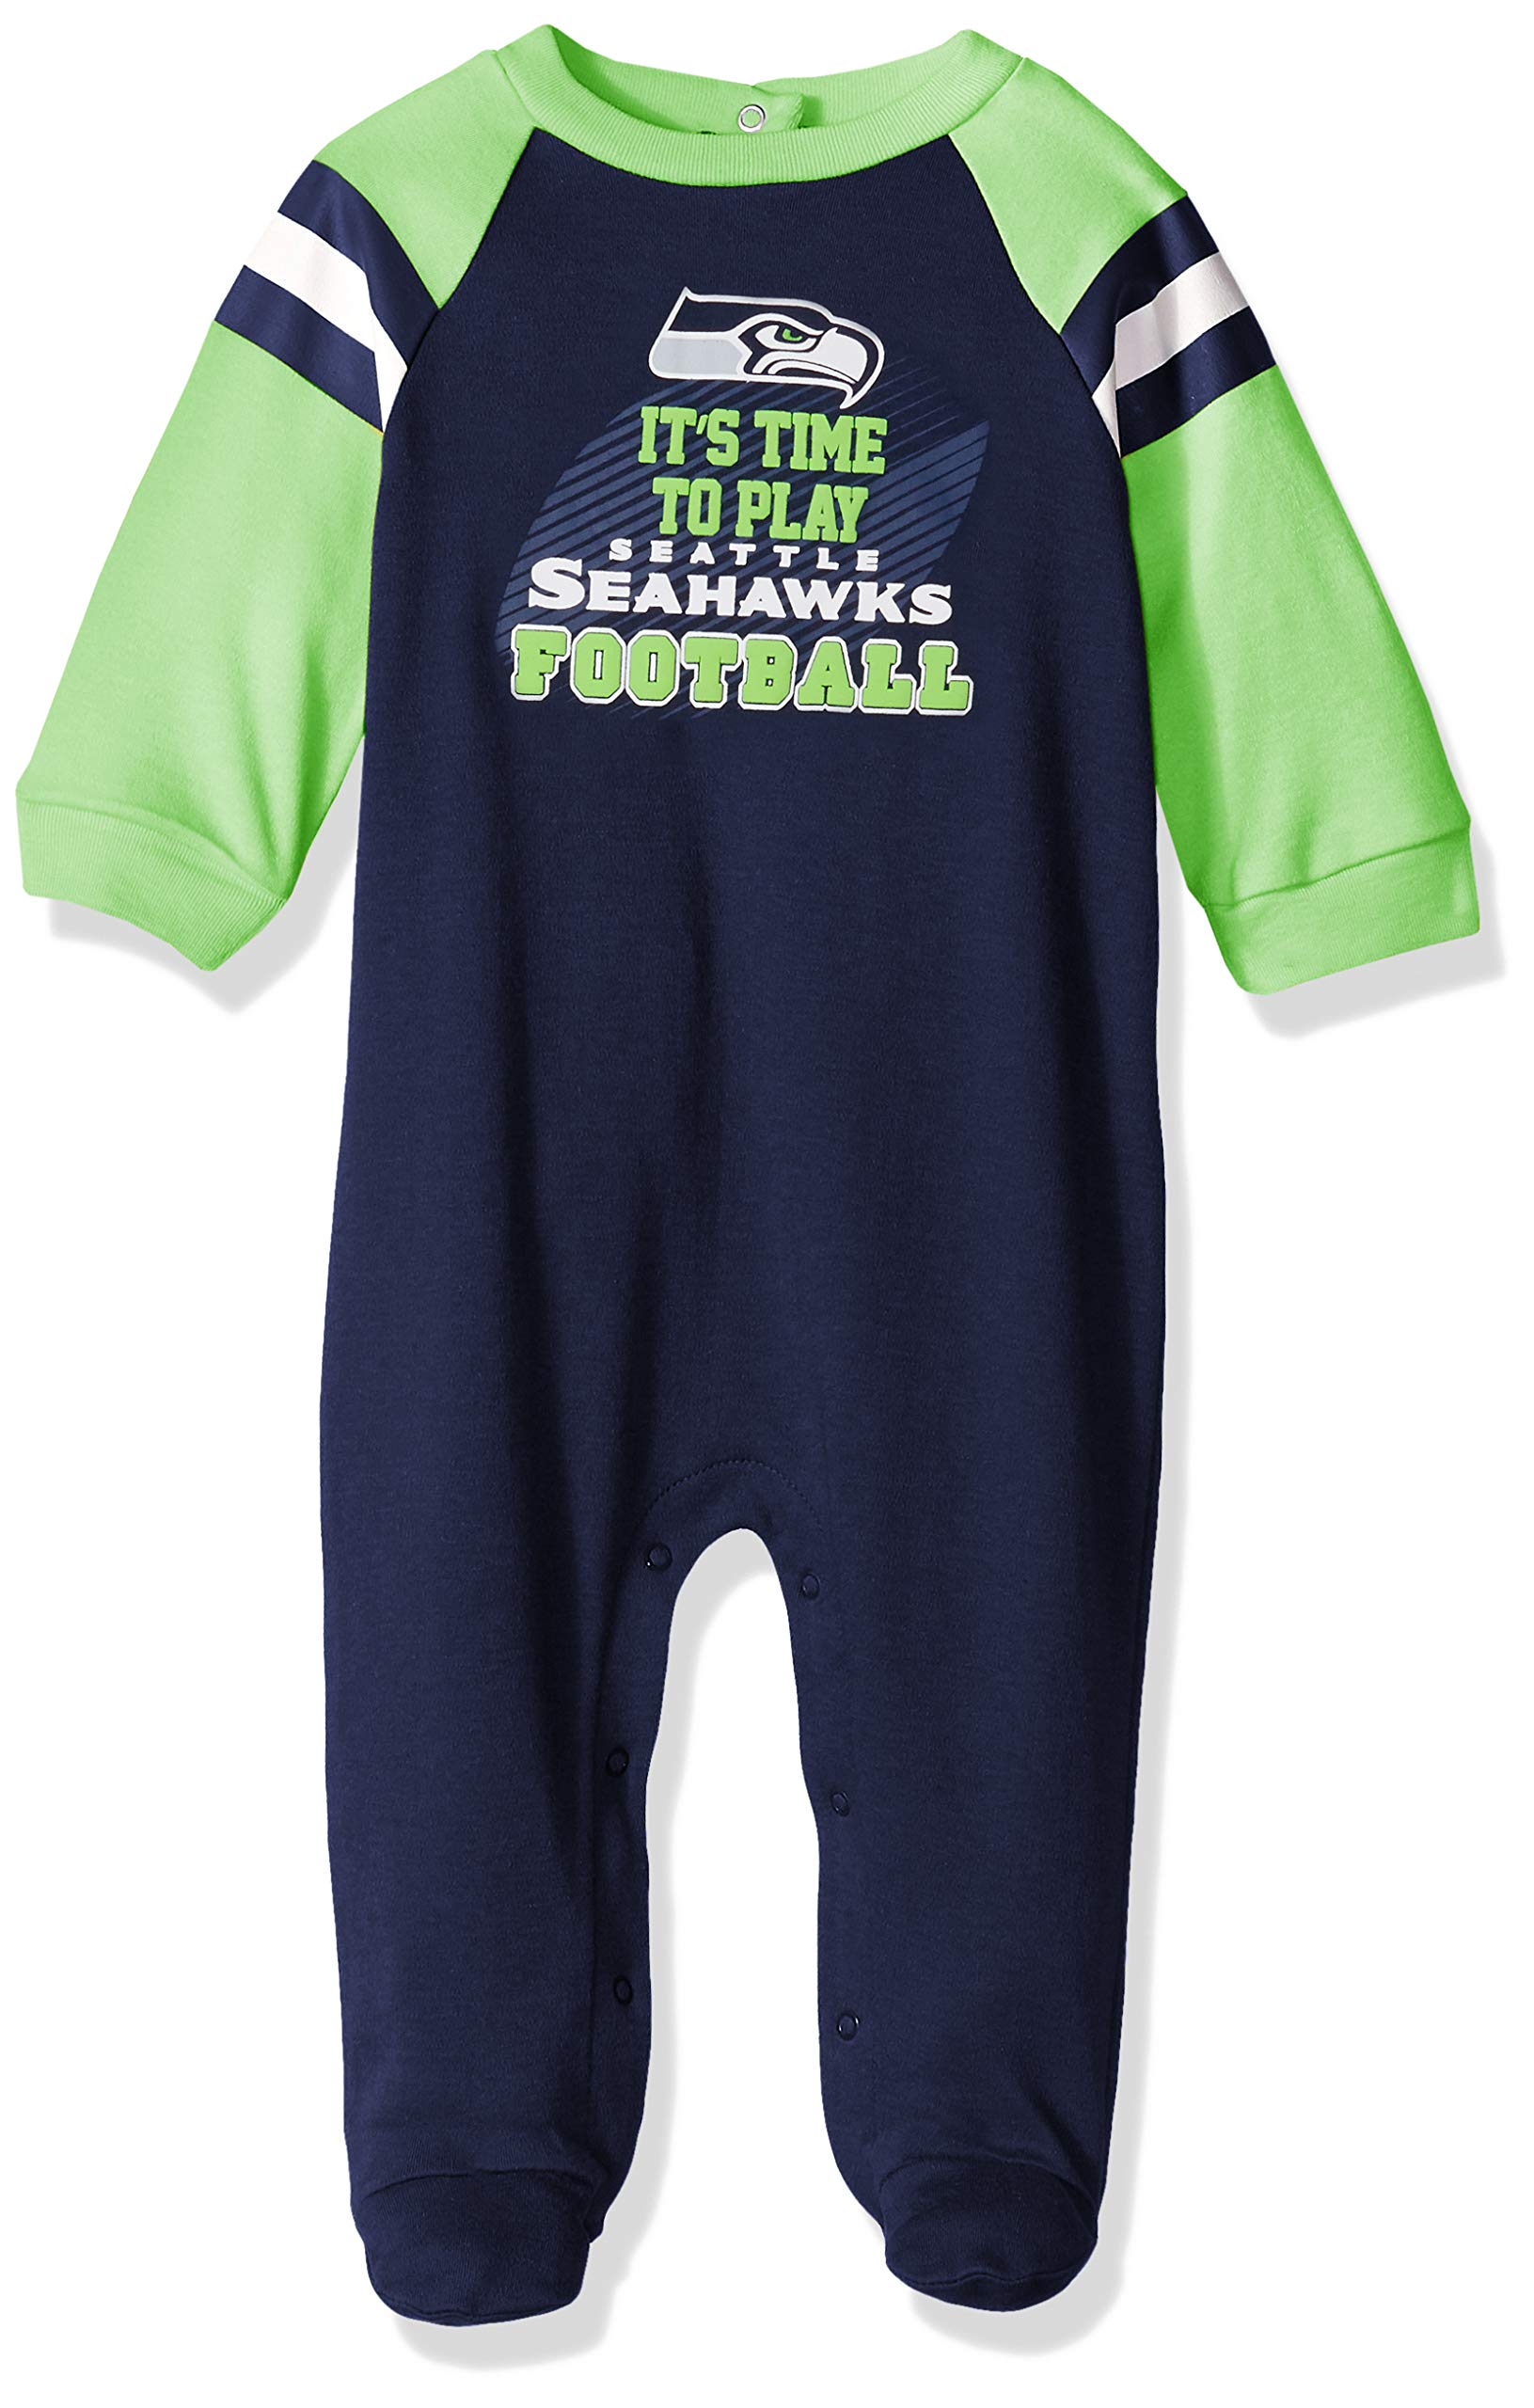 NFL Seattle Seahawks Team Sleep And Play Footies, bluegreen Seattle Seahawks, 3-6 Months (138731160SEA06M-419)